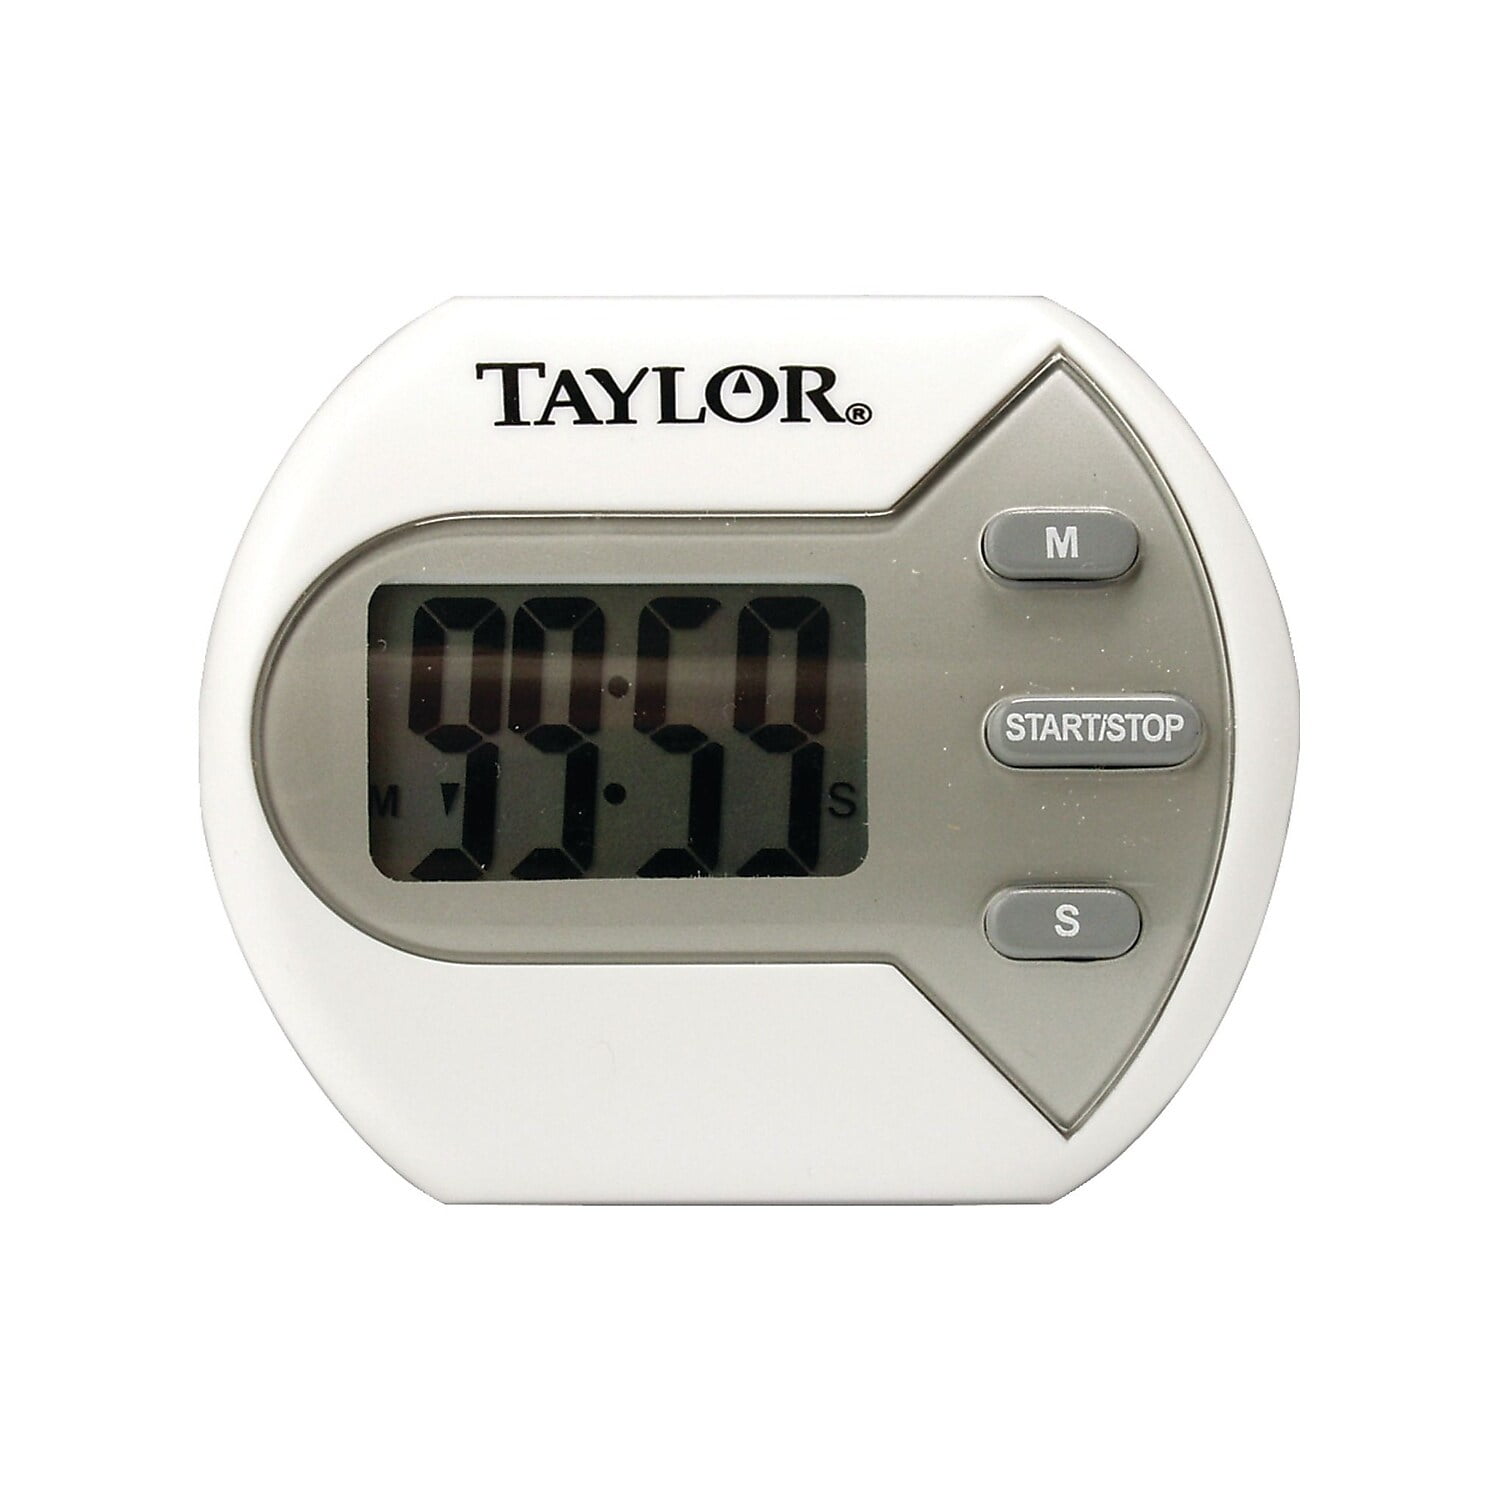 Taylor 5806 Digital Multi-Purpose Kitchen Timer